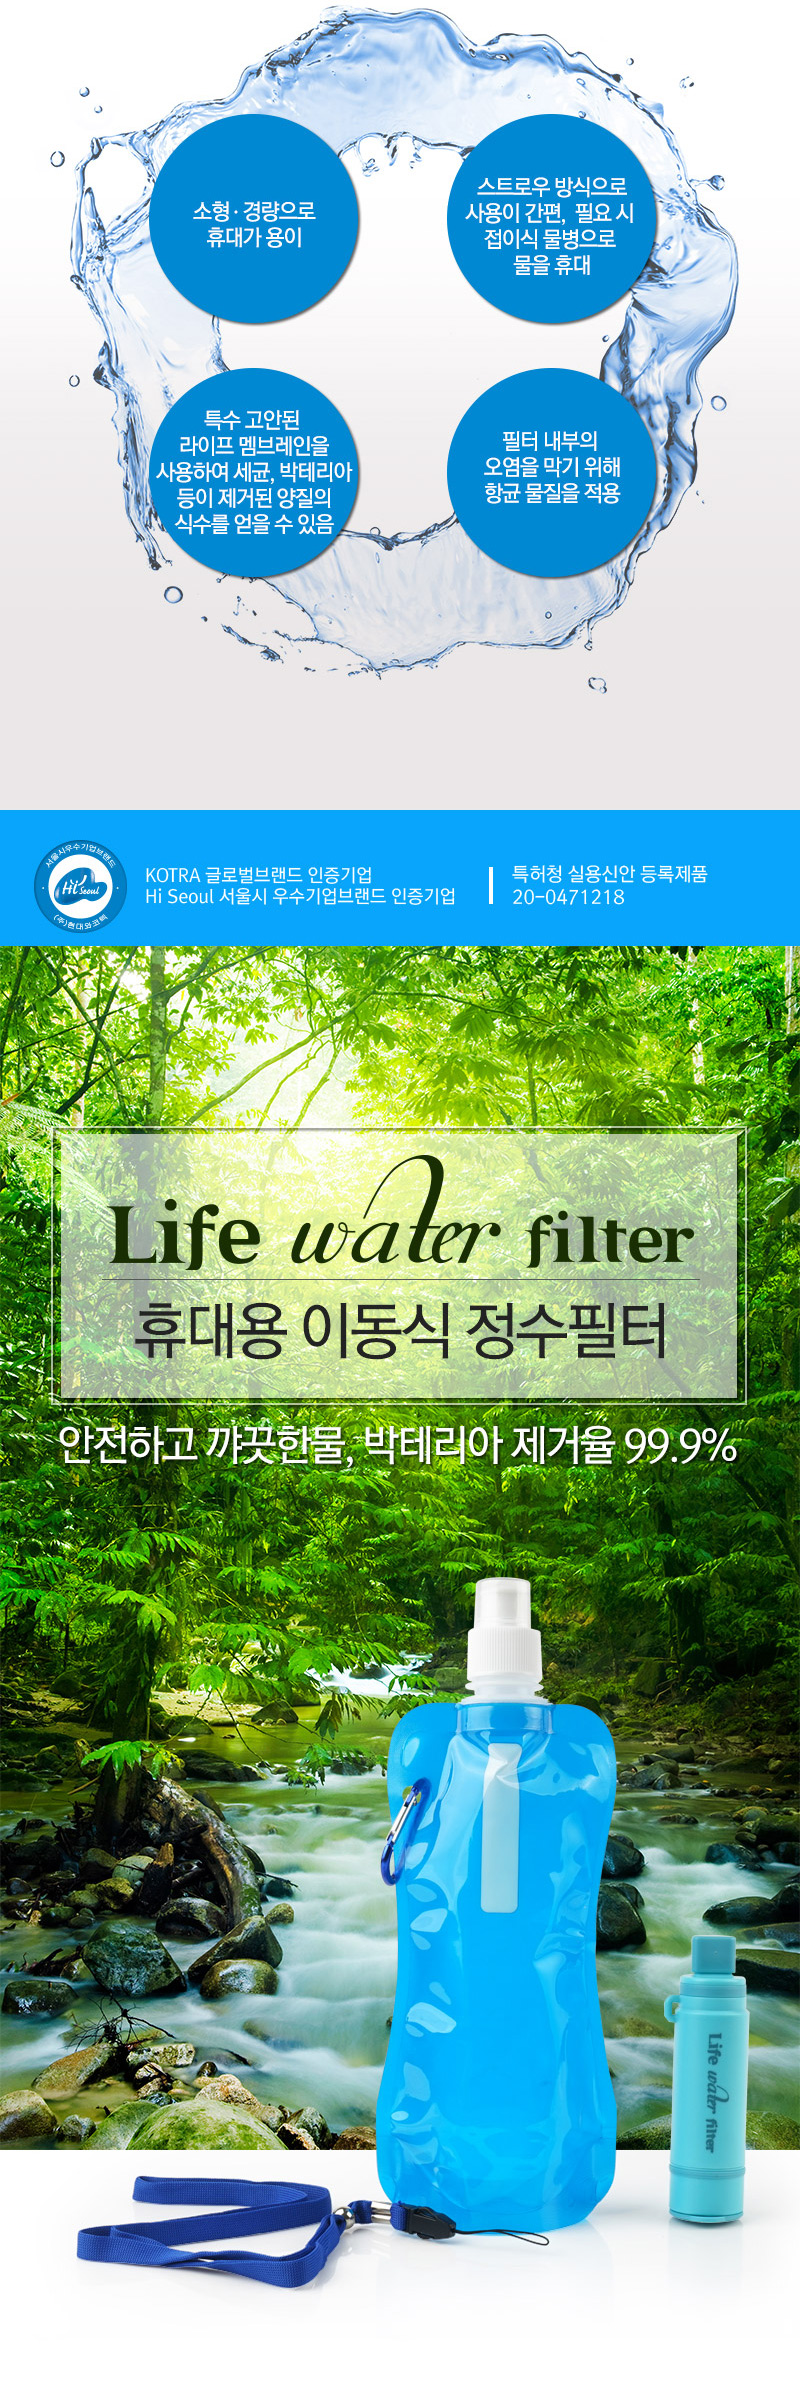 life_water_filter_03.jpg